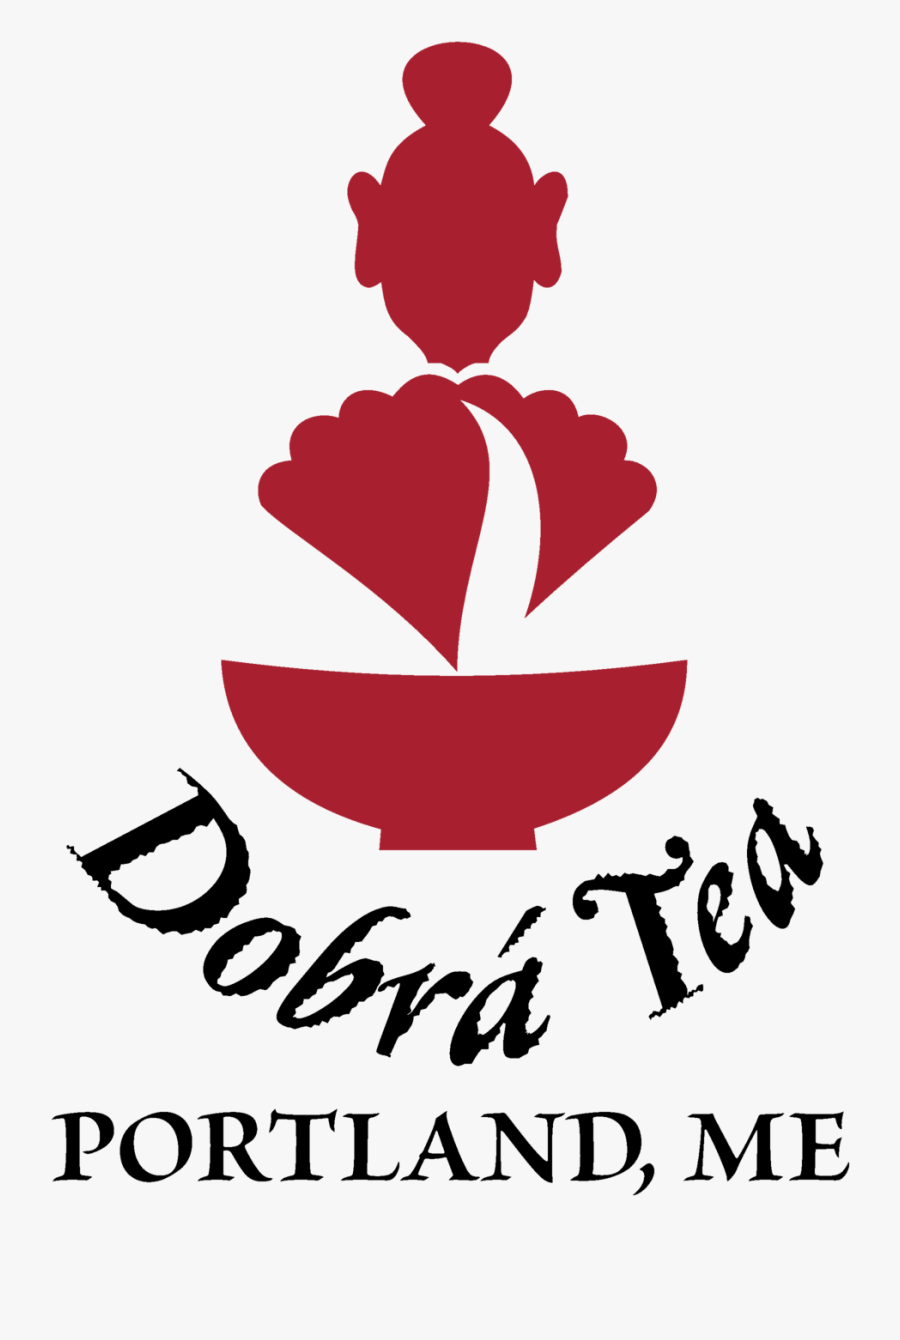 Logoportlandme2 - Dobra Tea Logo, Transparent Clipart